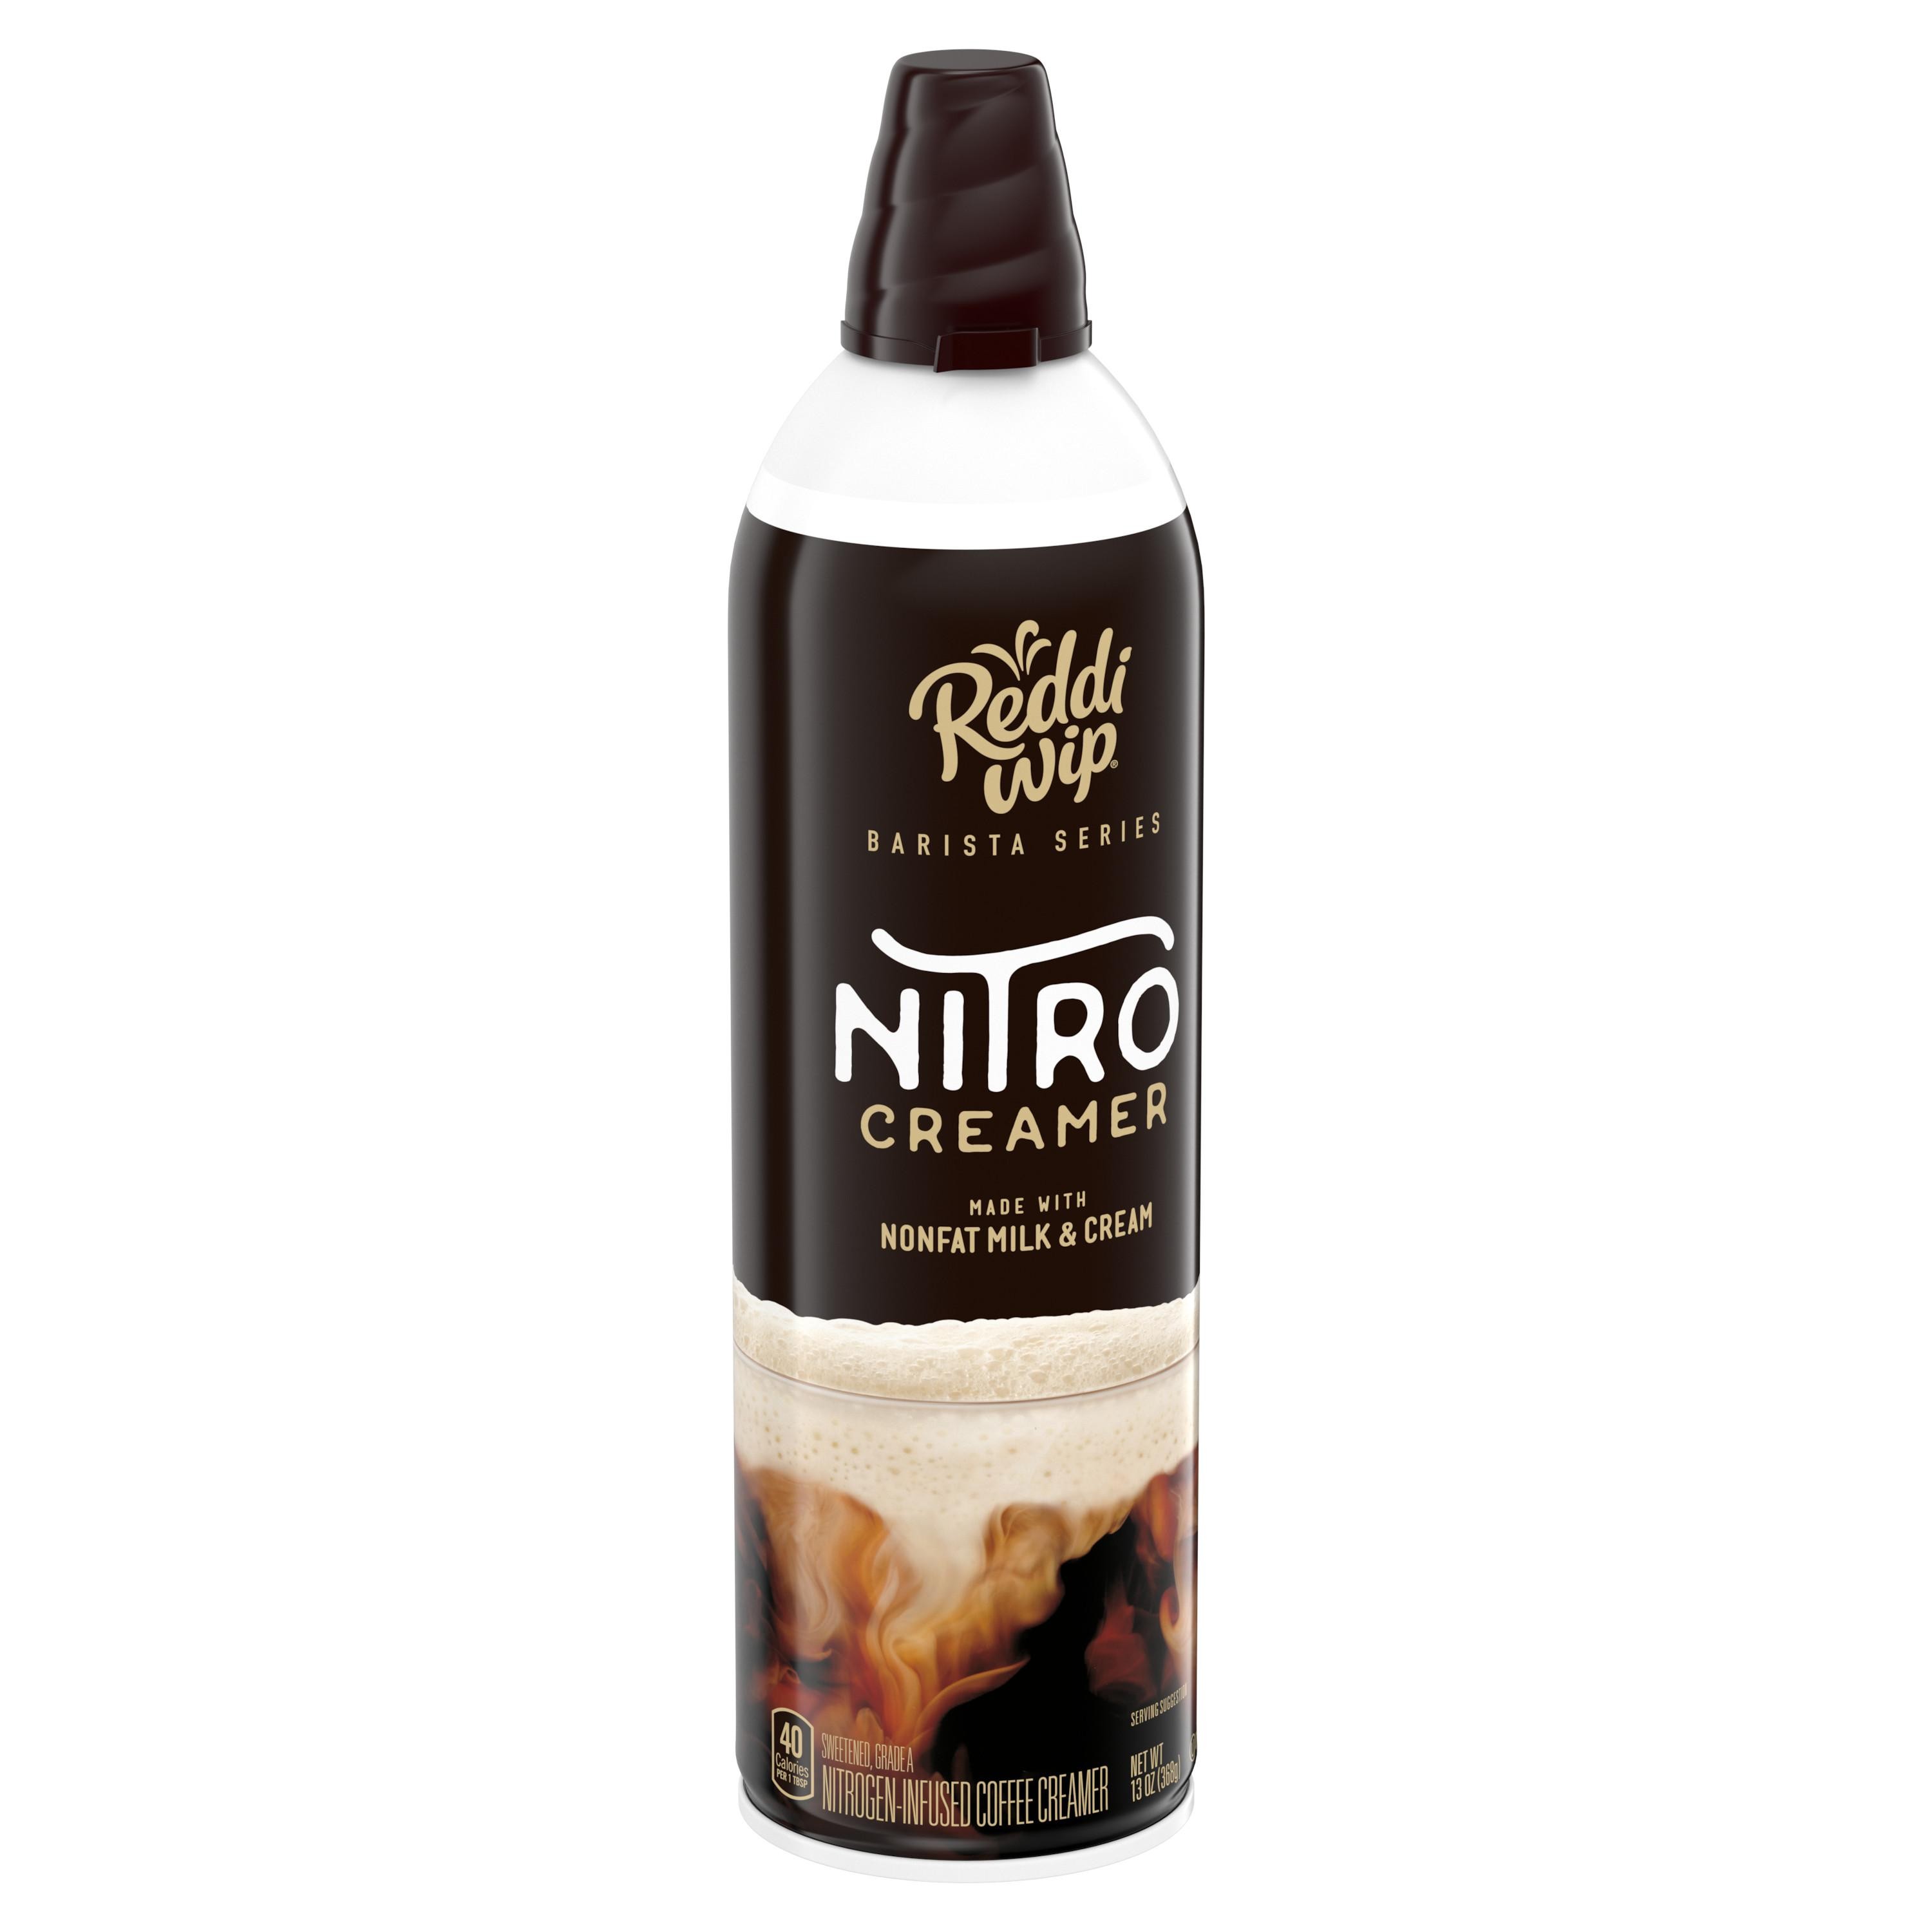 Reddi Wip Barista Series Nitro Coffee Creamer Topping - 13 oz